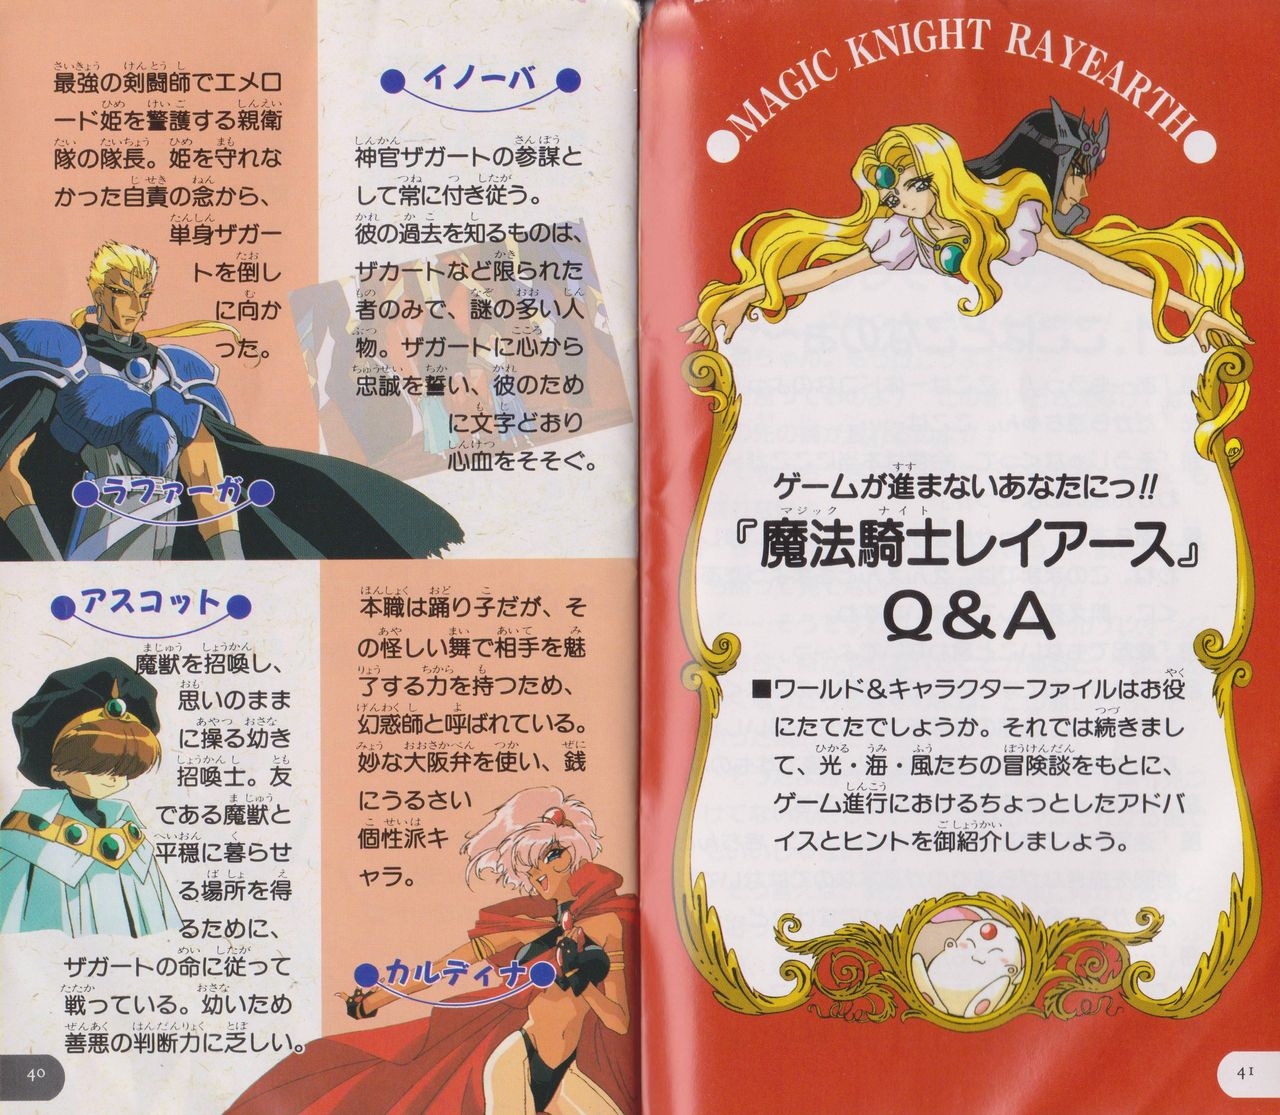 Magic Knight Rayearth - Box & Manual Scans [Super Famicom] 23